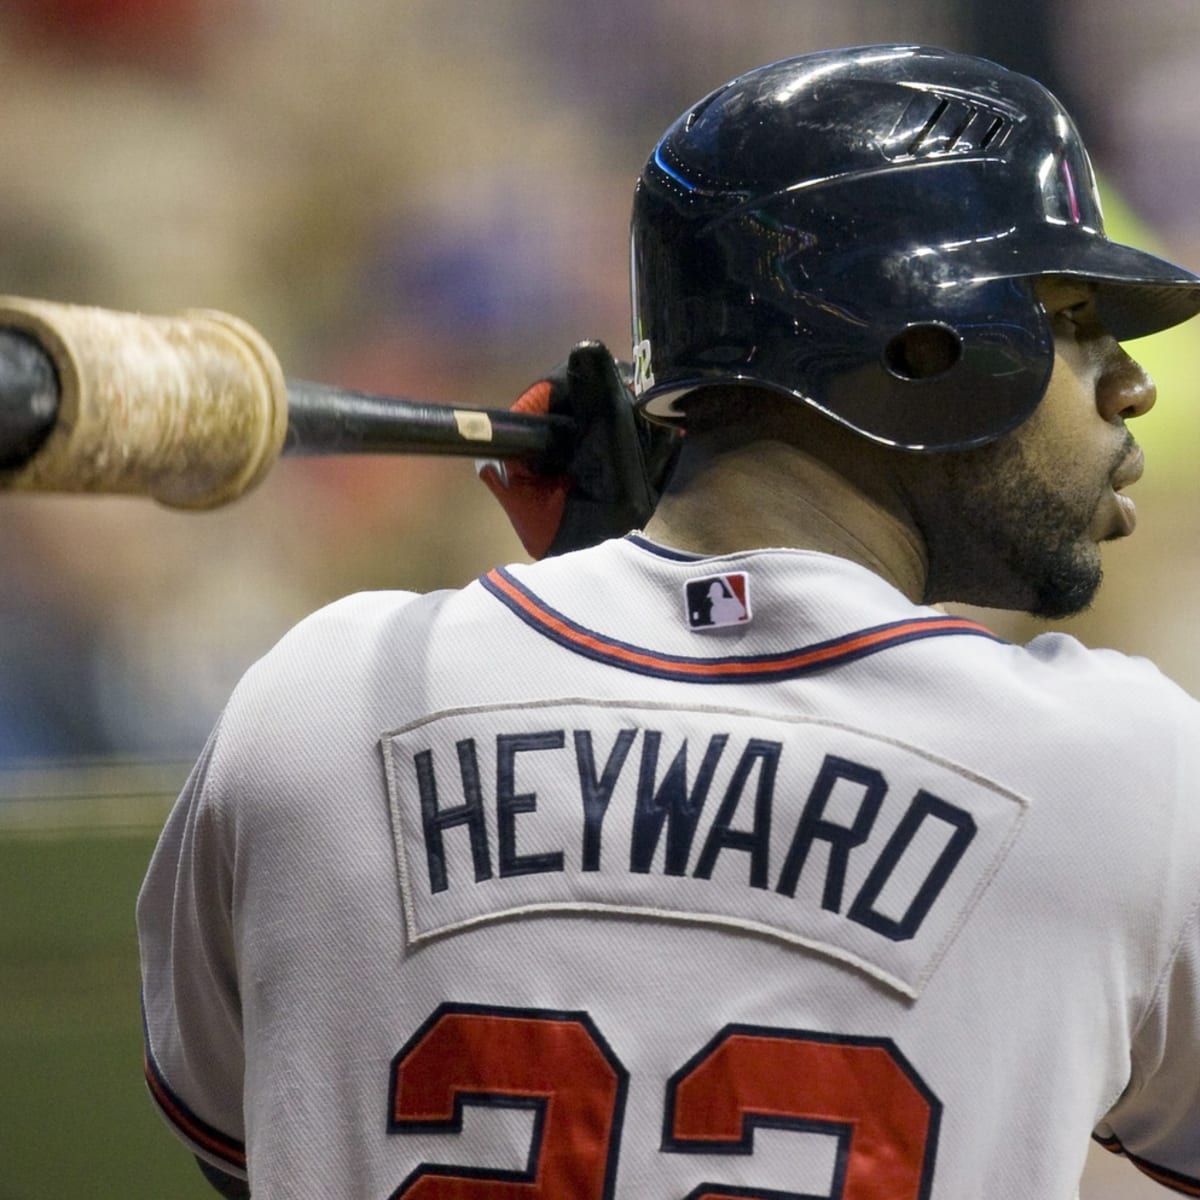 Cubs Release Jason Heyward - MLB Trade Rumors